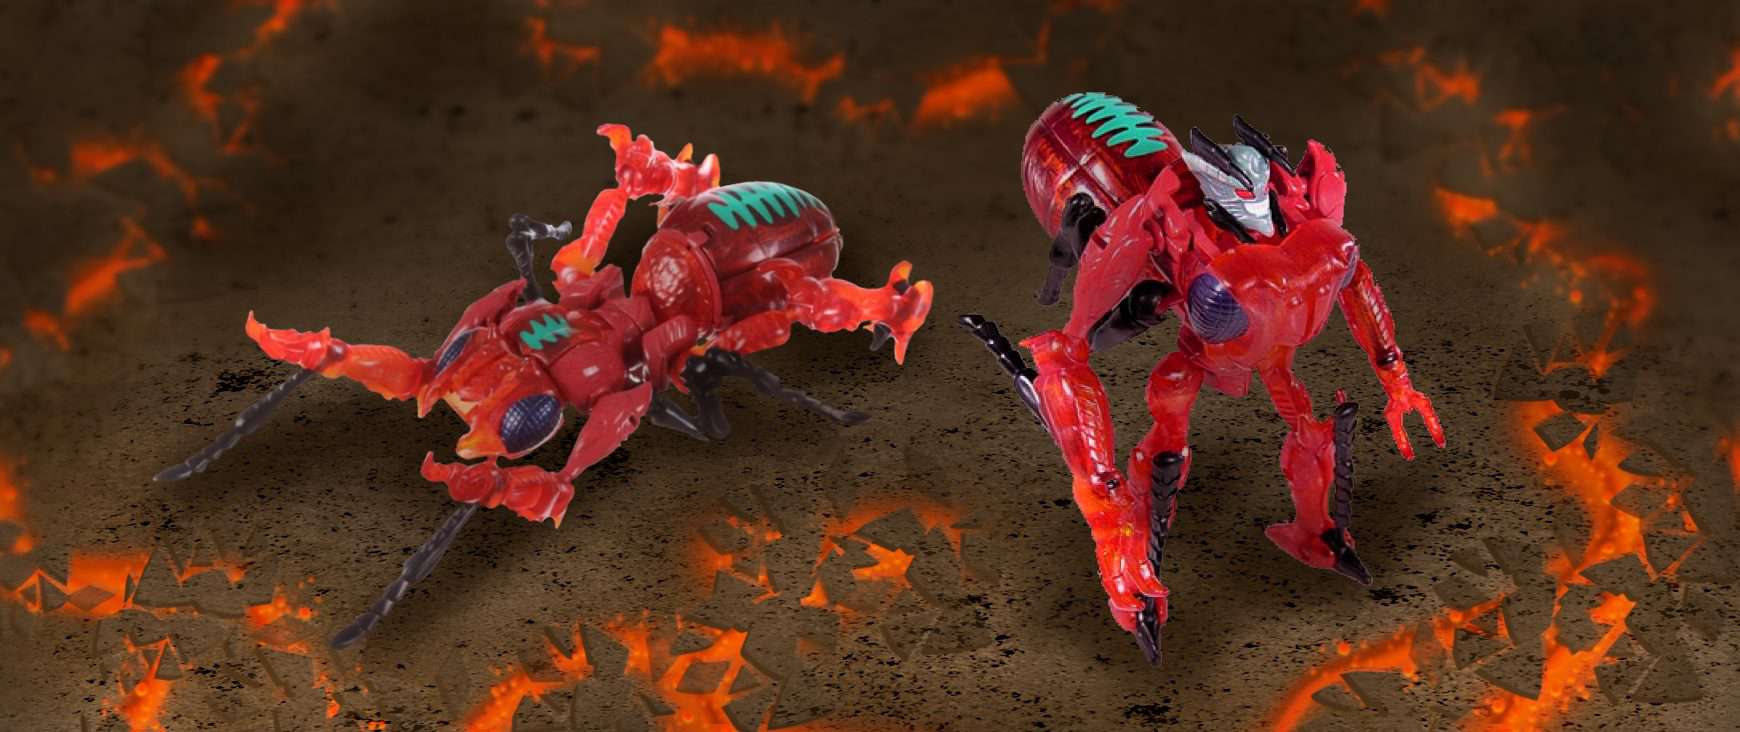 Inferno Beast Wars toy